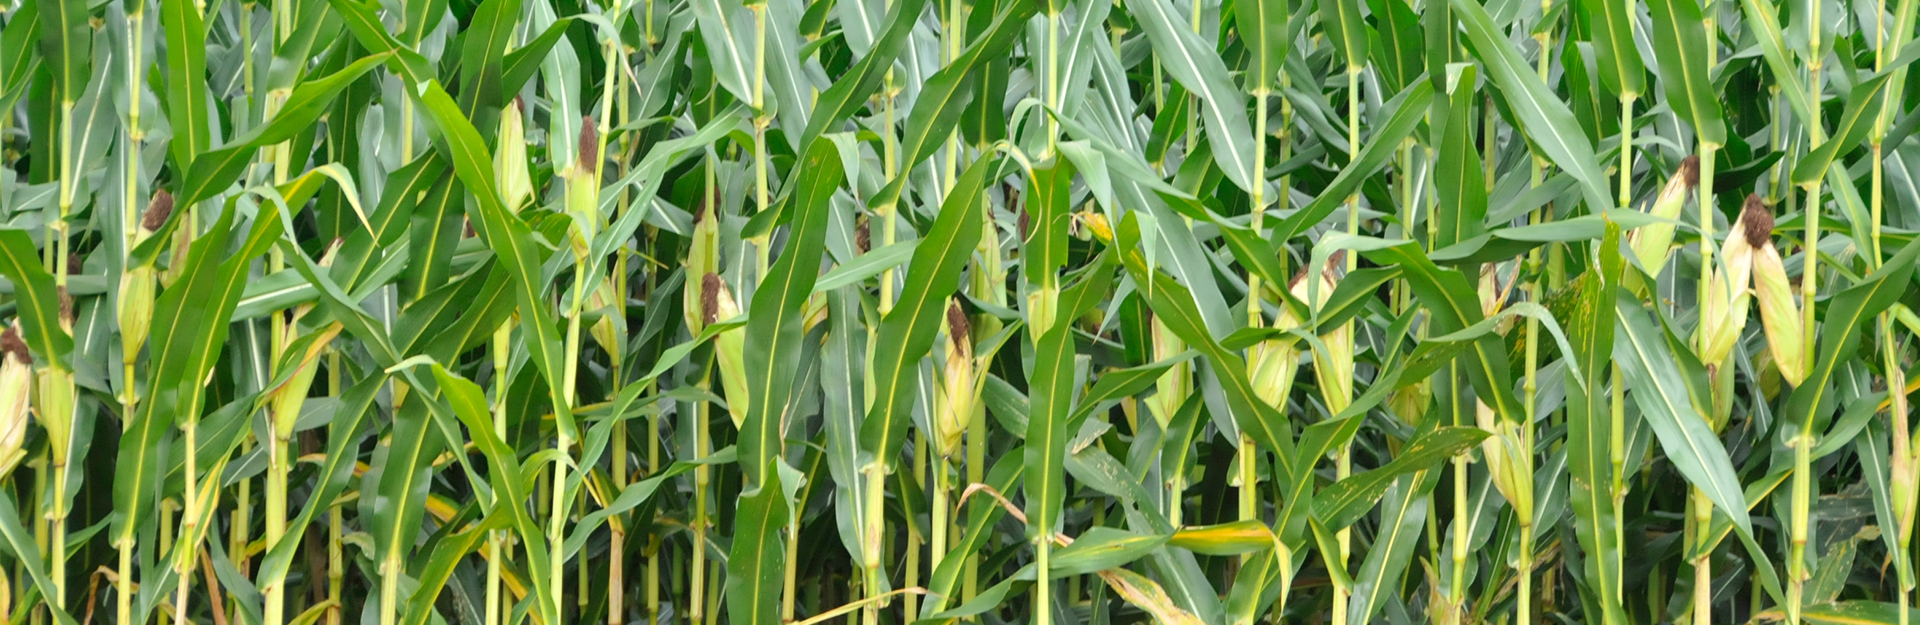 corn plants in row crops